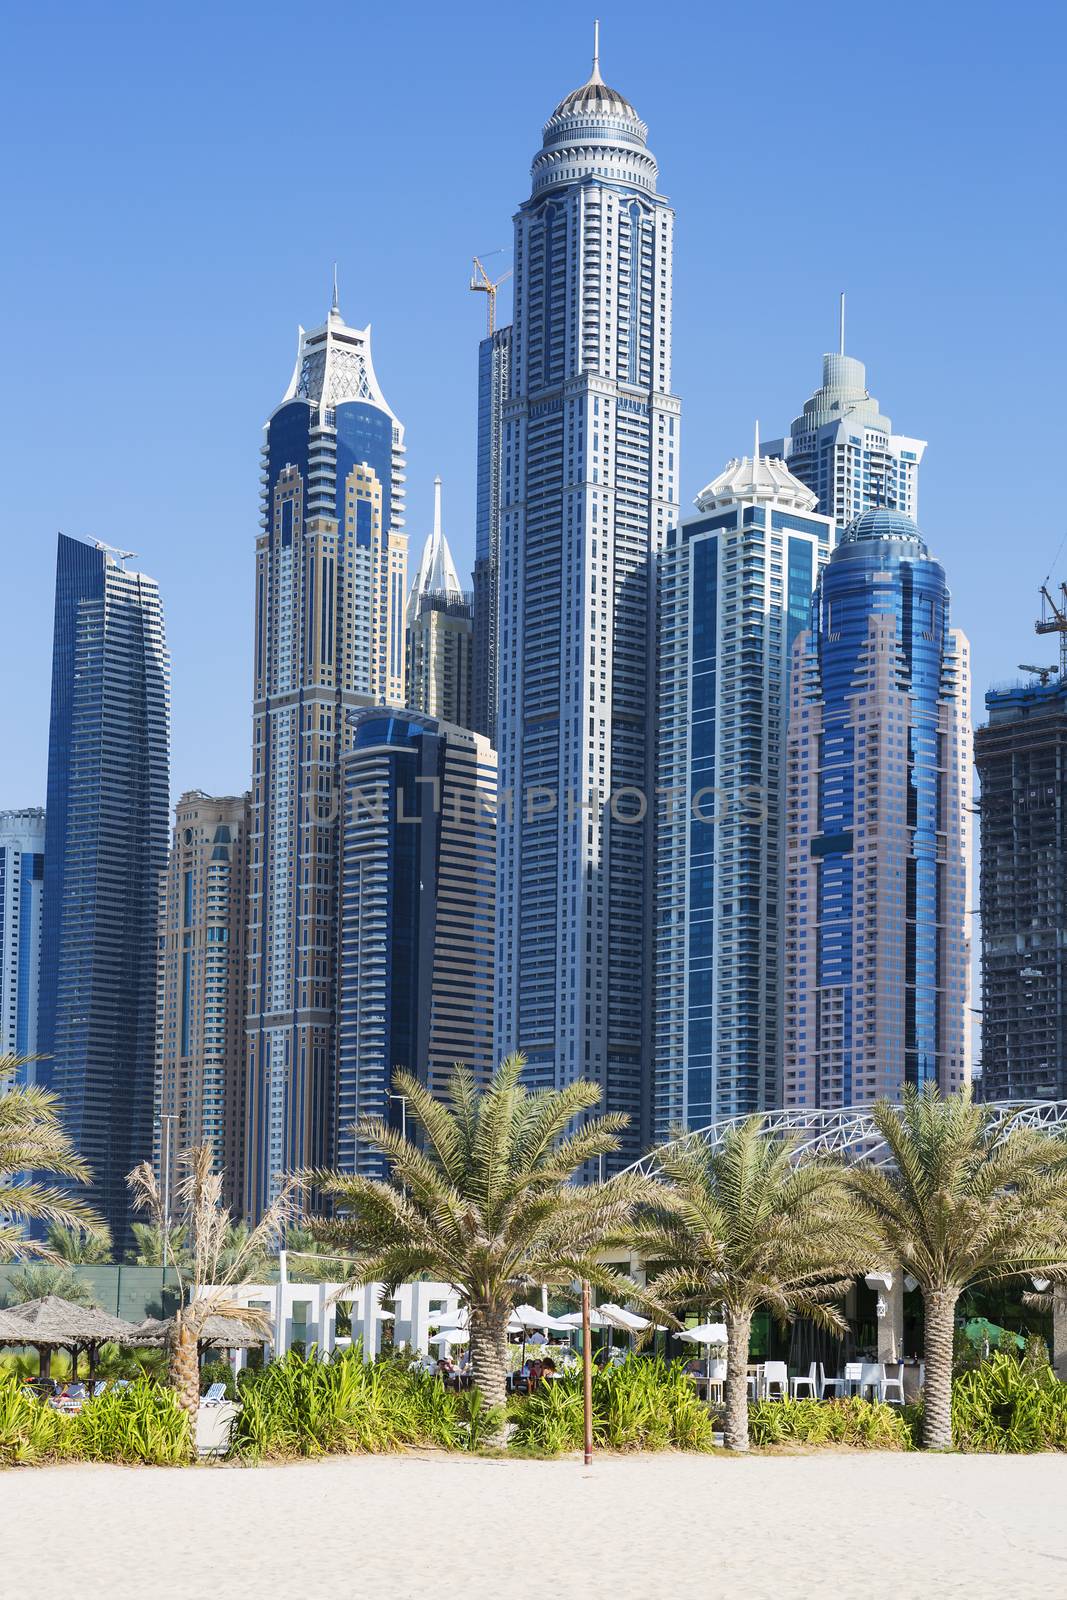 Skyscrapers and jumeirah beach in Dubai. UAE 